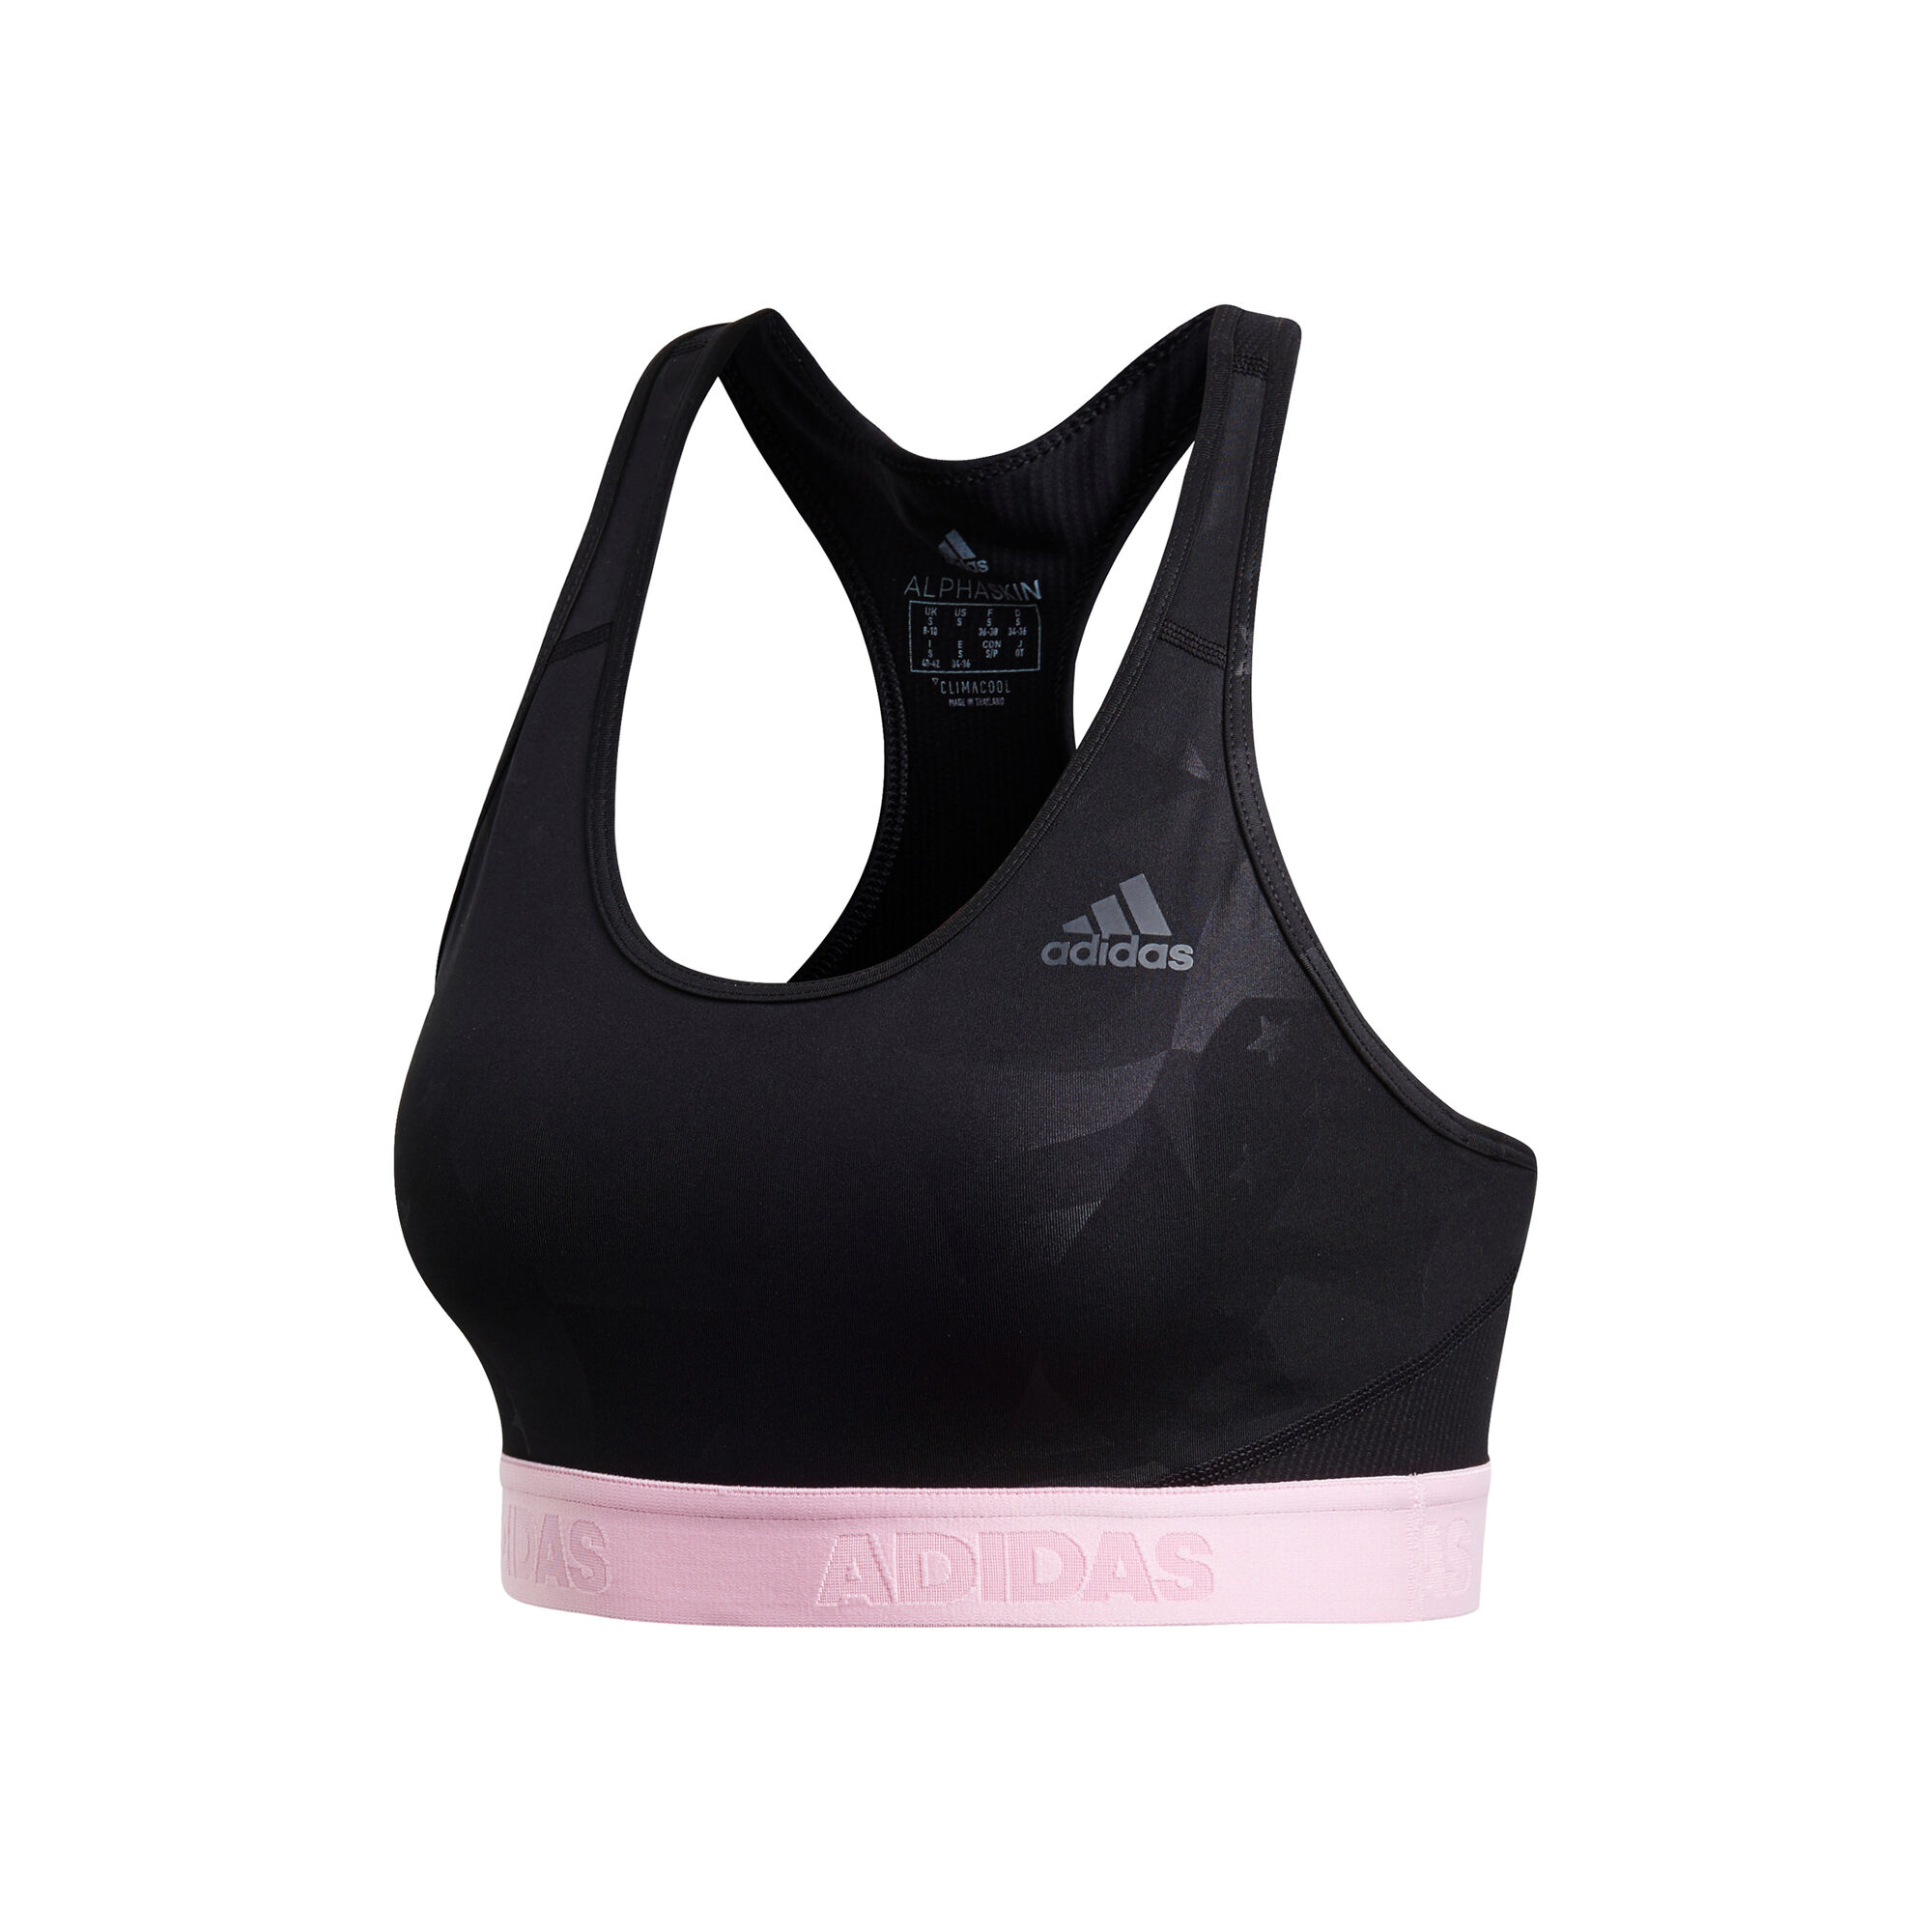 Buy adidas Don't Rest AlphaSkin Printed Sports Bras Women Black, Pink  online